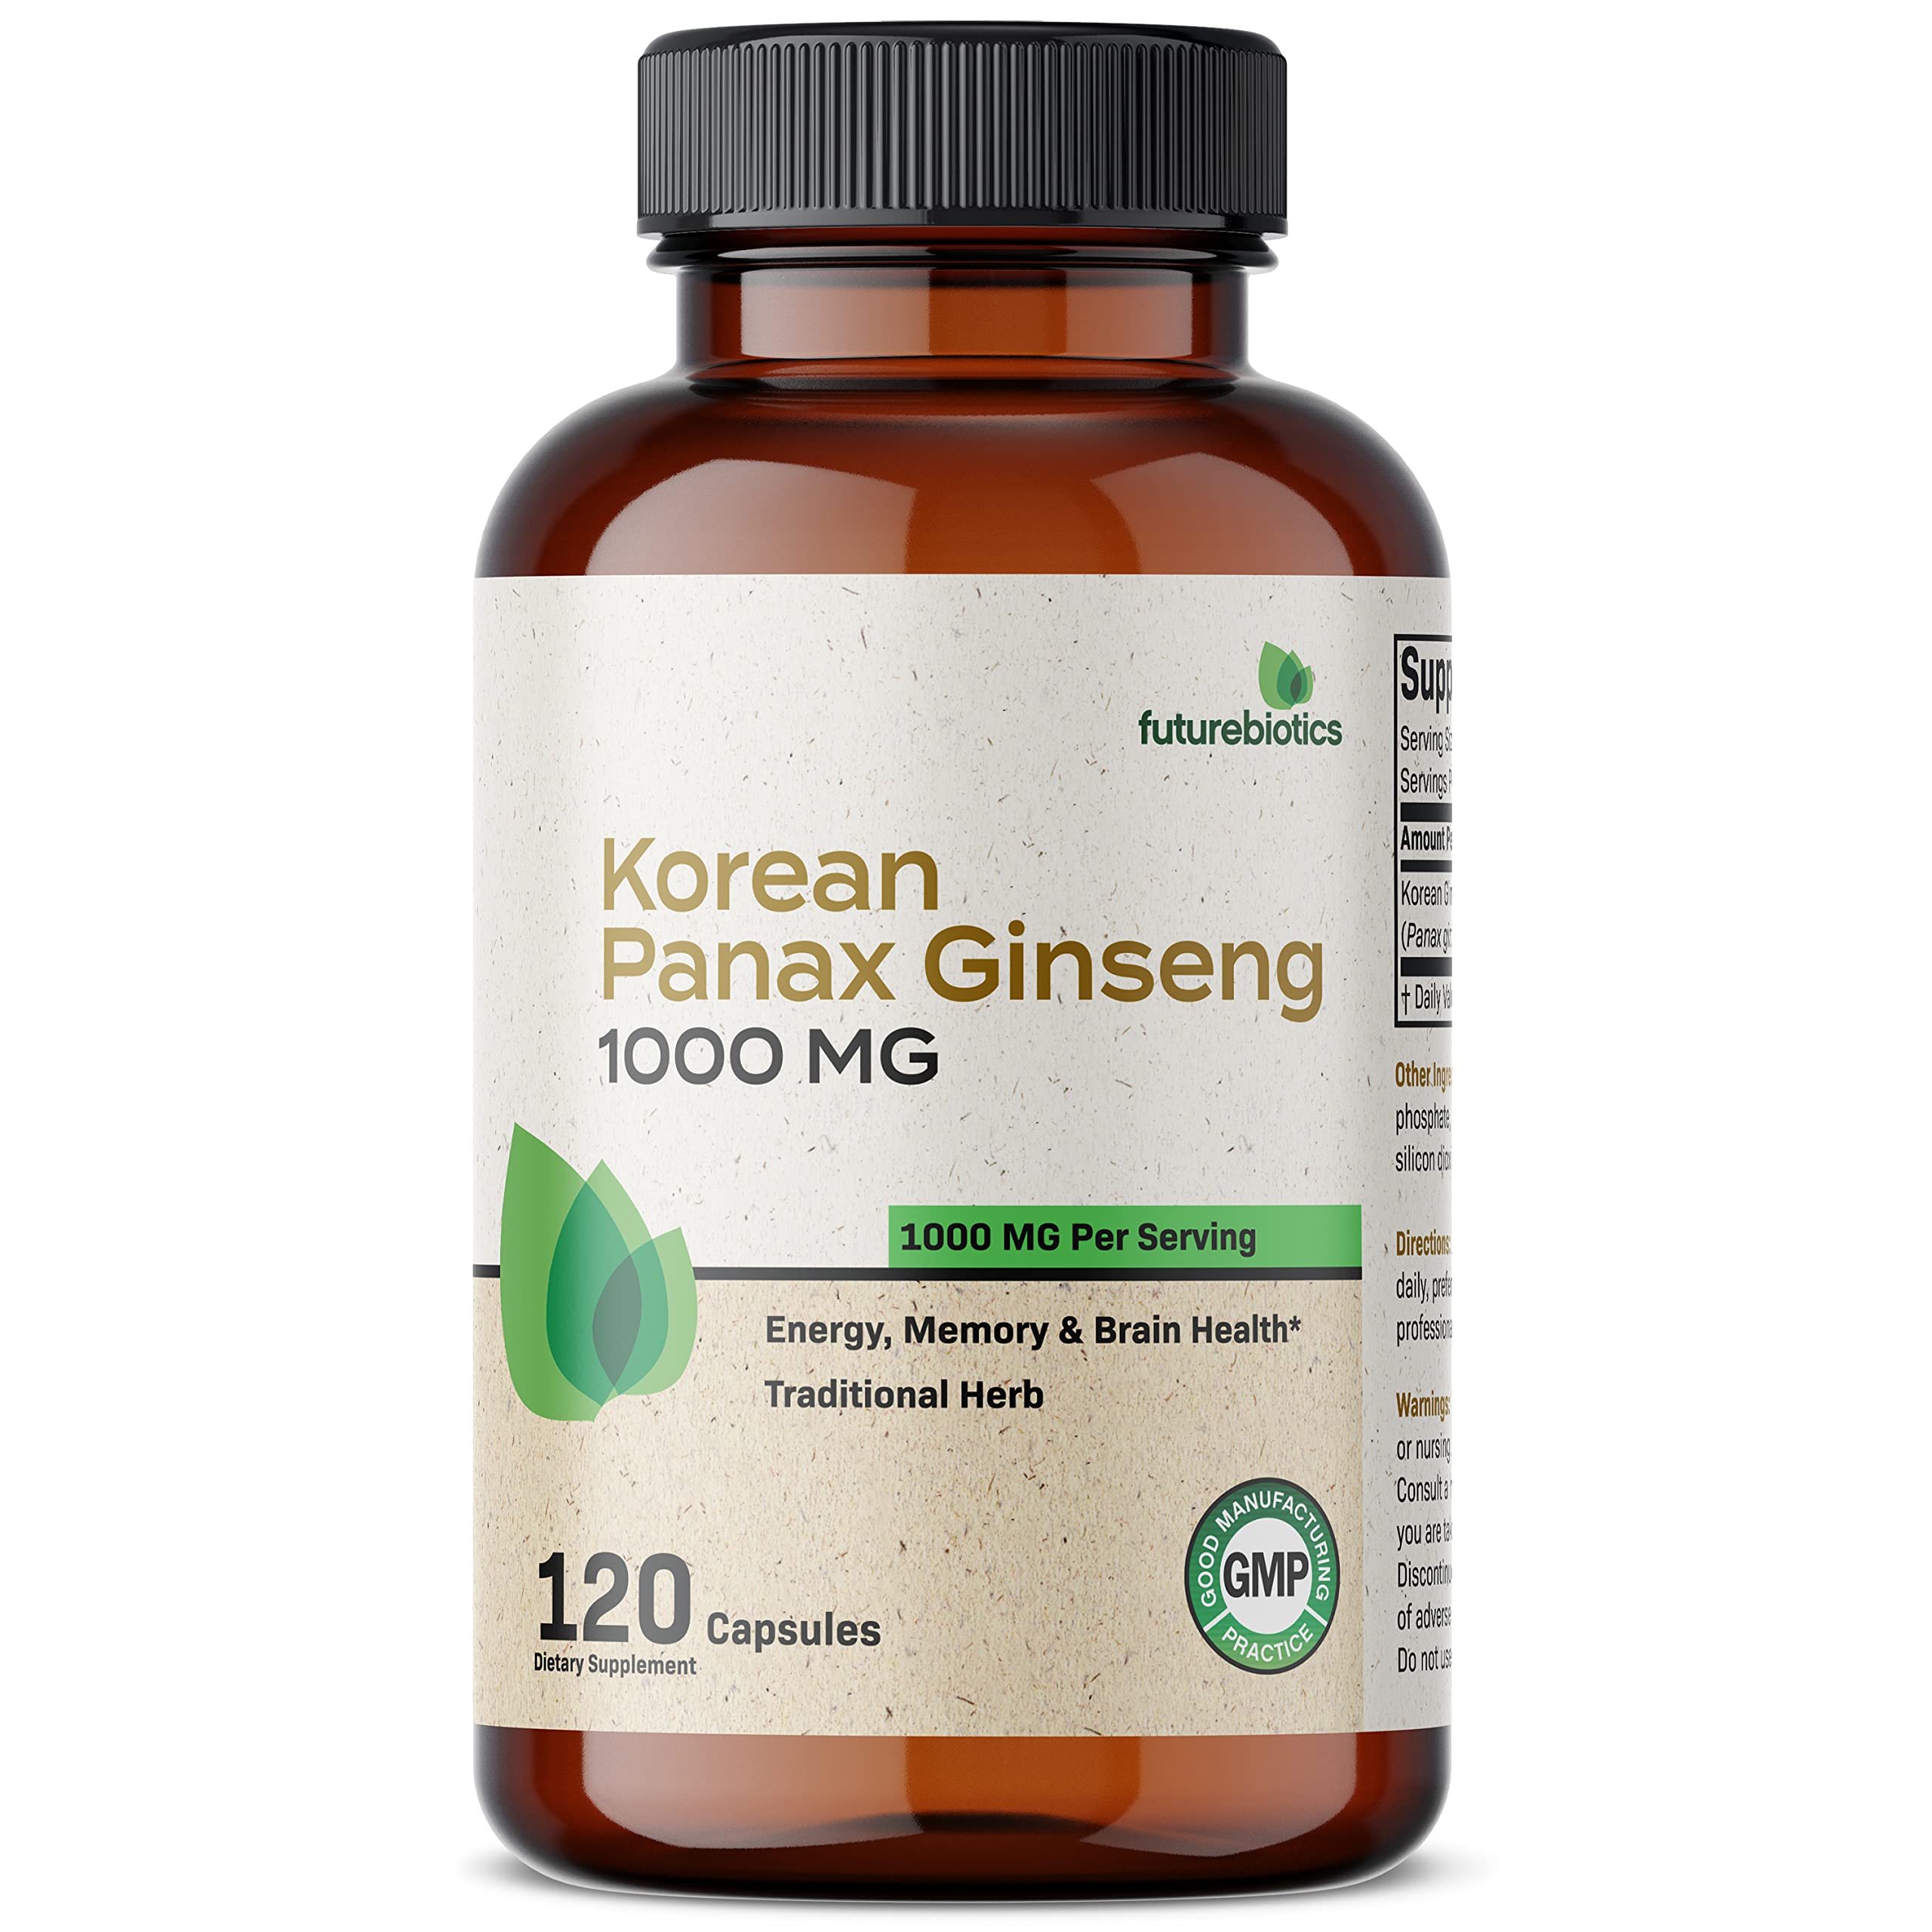 Futurebiotics Korean Panax Ginseng 1000 MG Per Serving Energy, Memory & Brain Health Support, Non-GMO, 120 Capsules